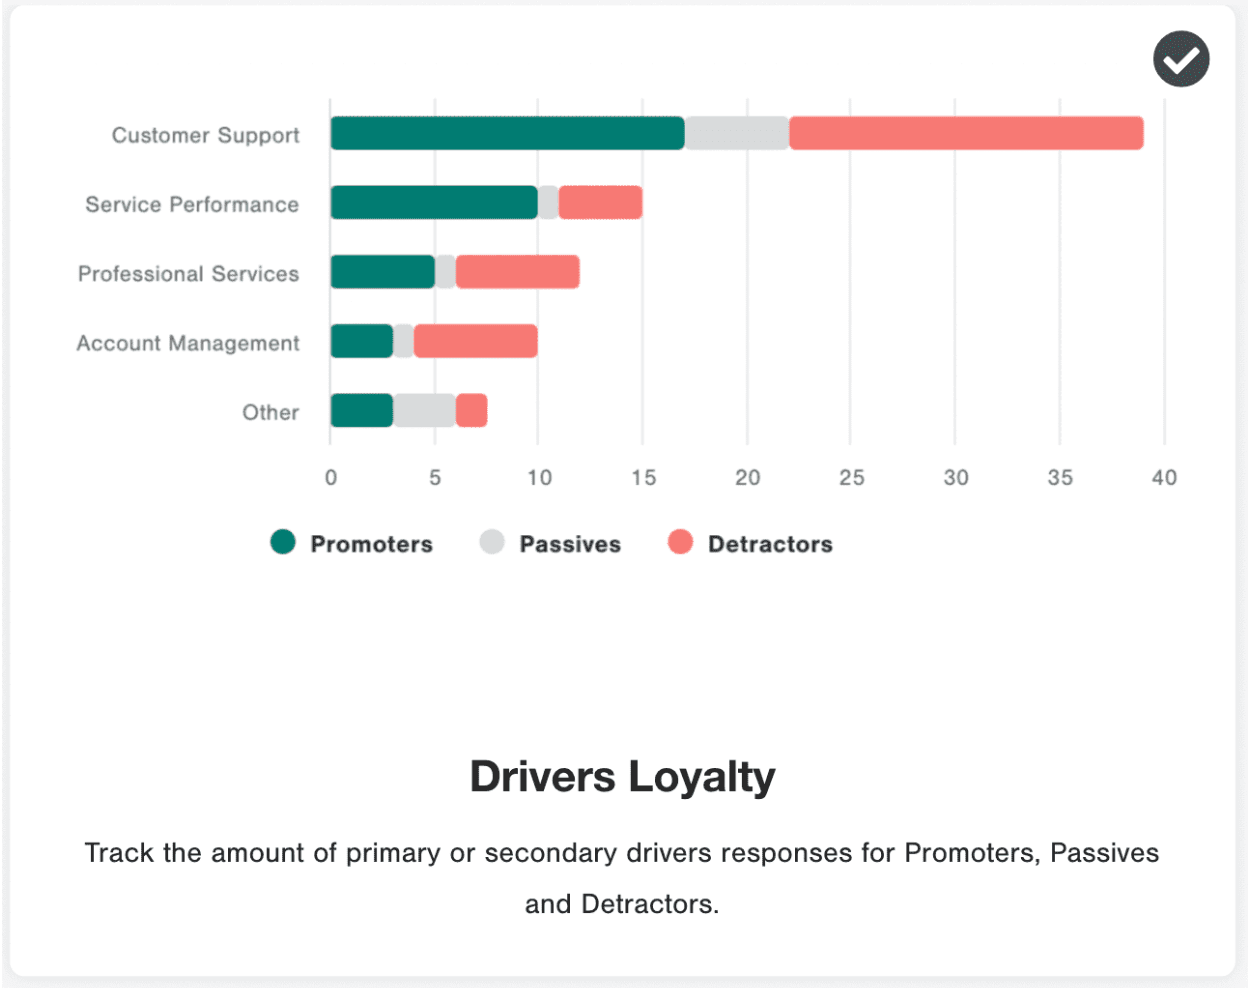 Drivers Loyalty